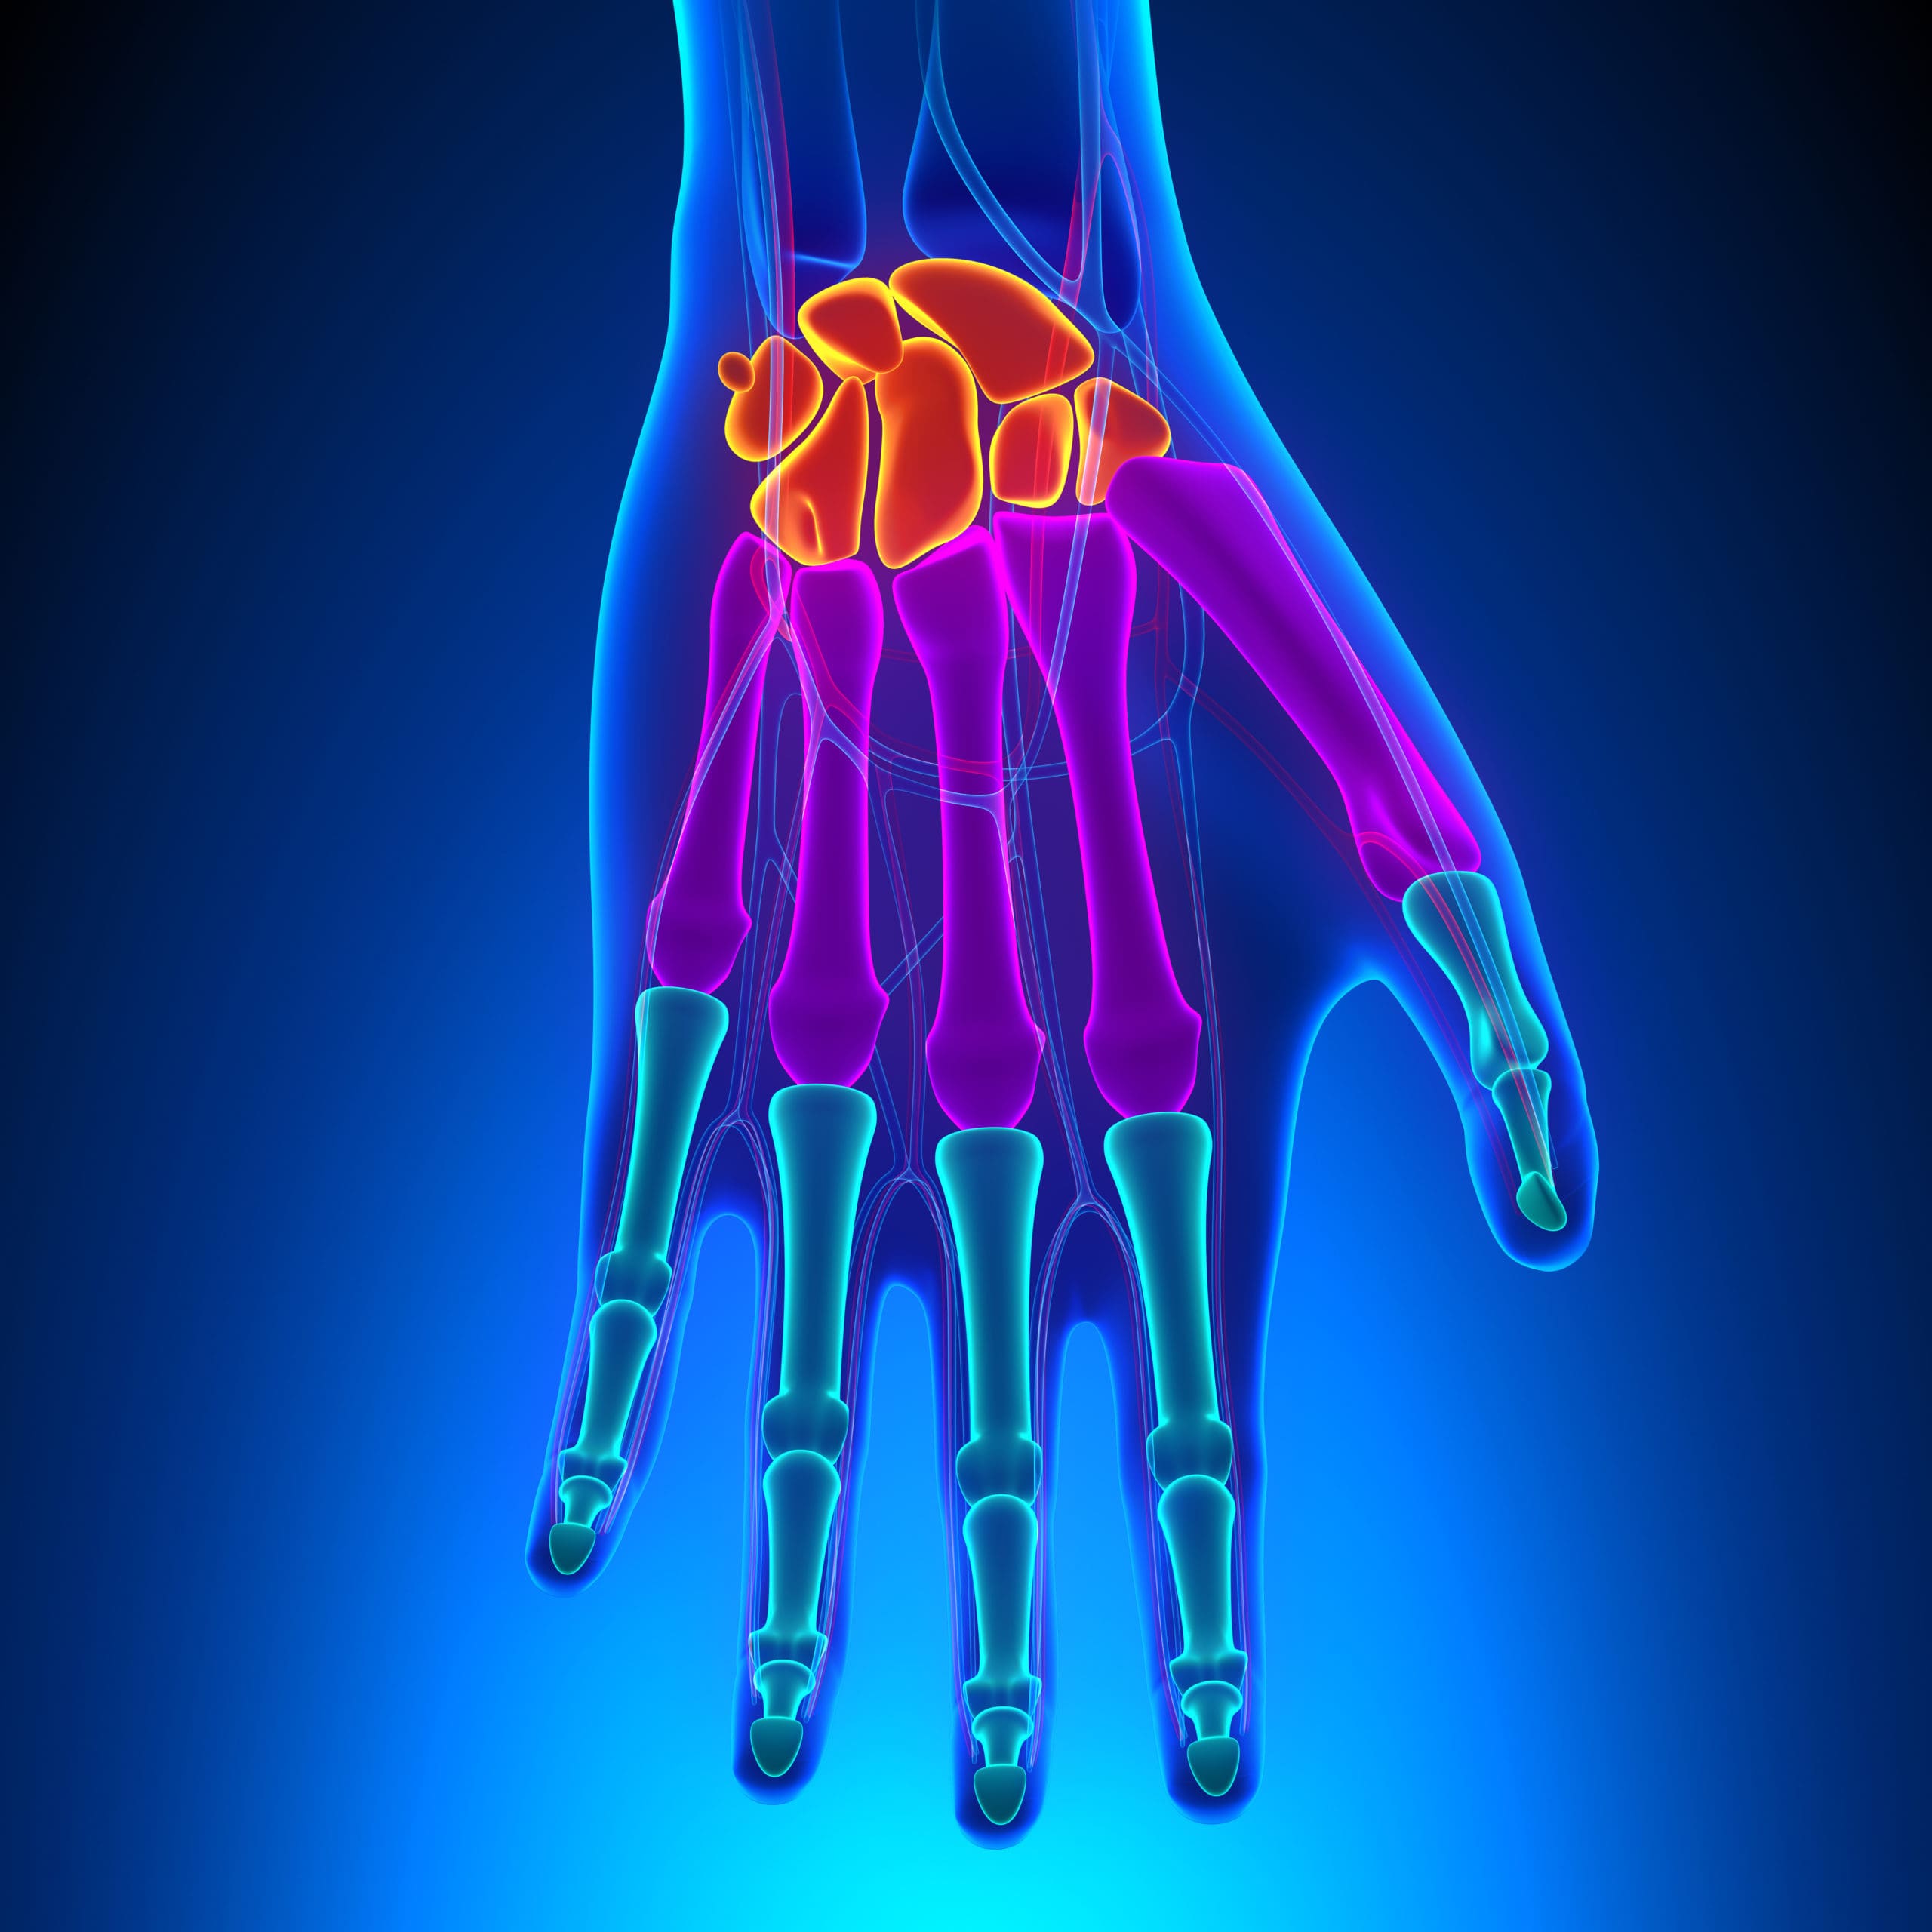 Anatomy of Human Hand and Wrist with Circulatory System